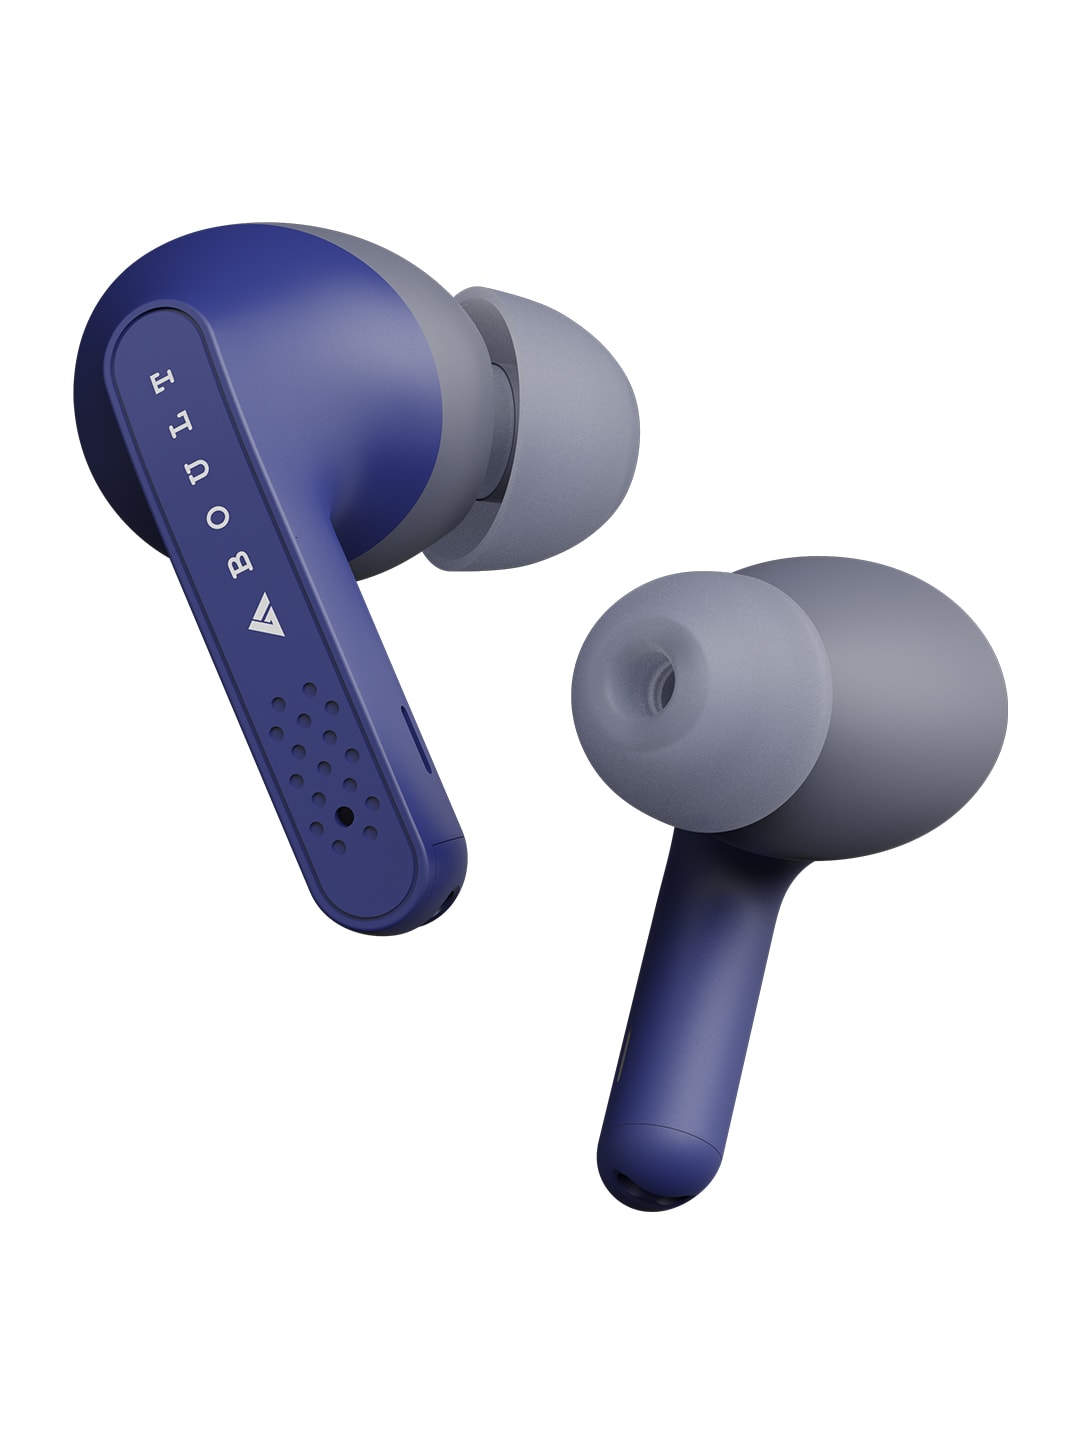 BOULT AUDIO GearPods True Wireless Earbuds (Blue) Price in India